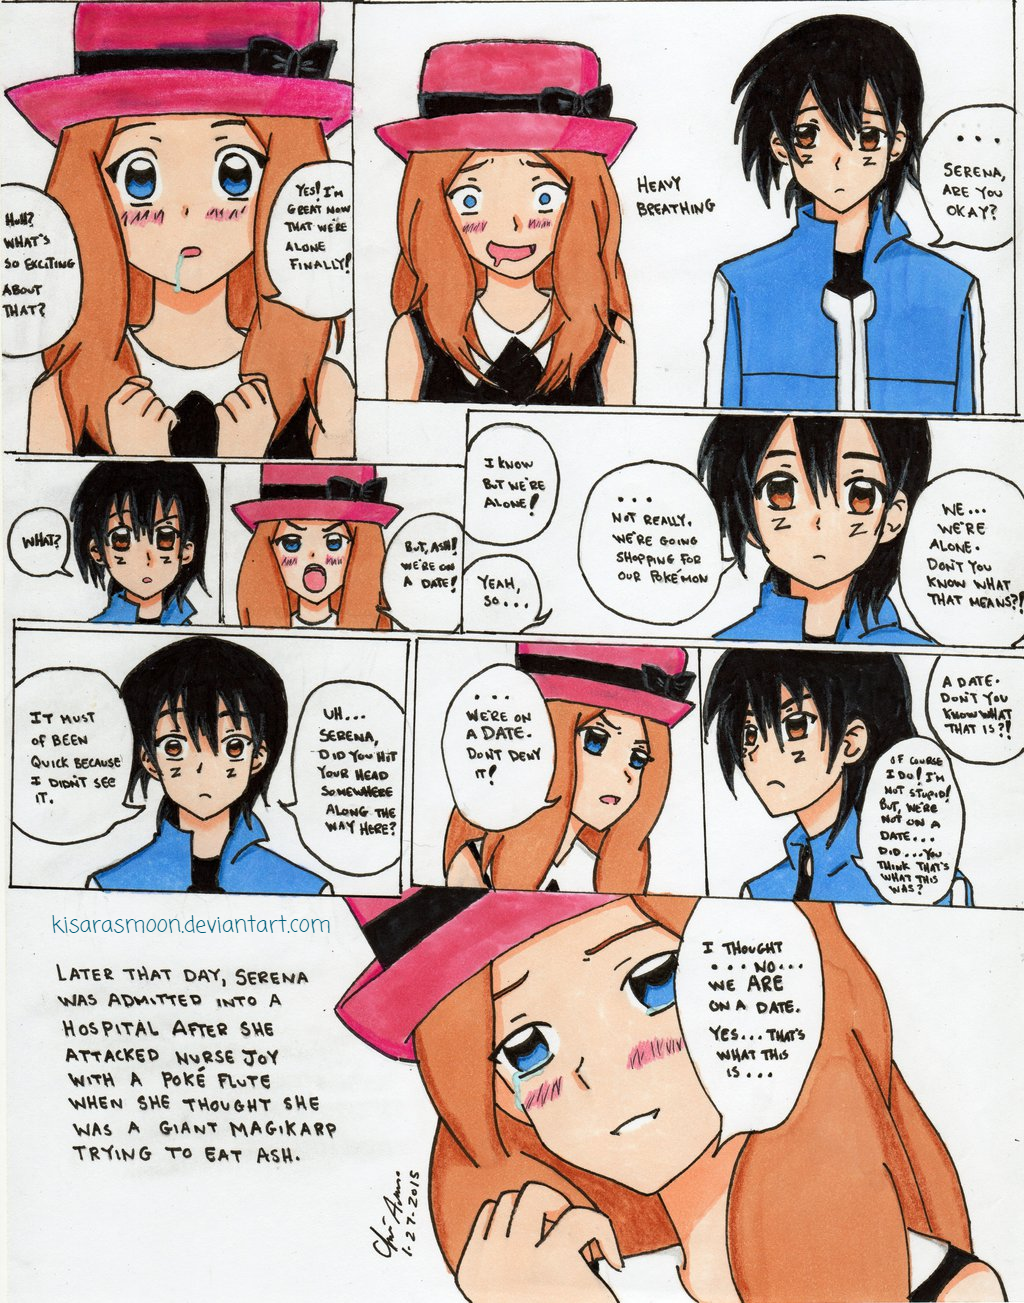 Doujinshi vs Anime: Dawn by Kisarasmoon on DeviantArt